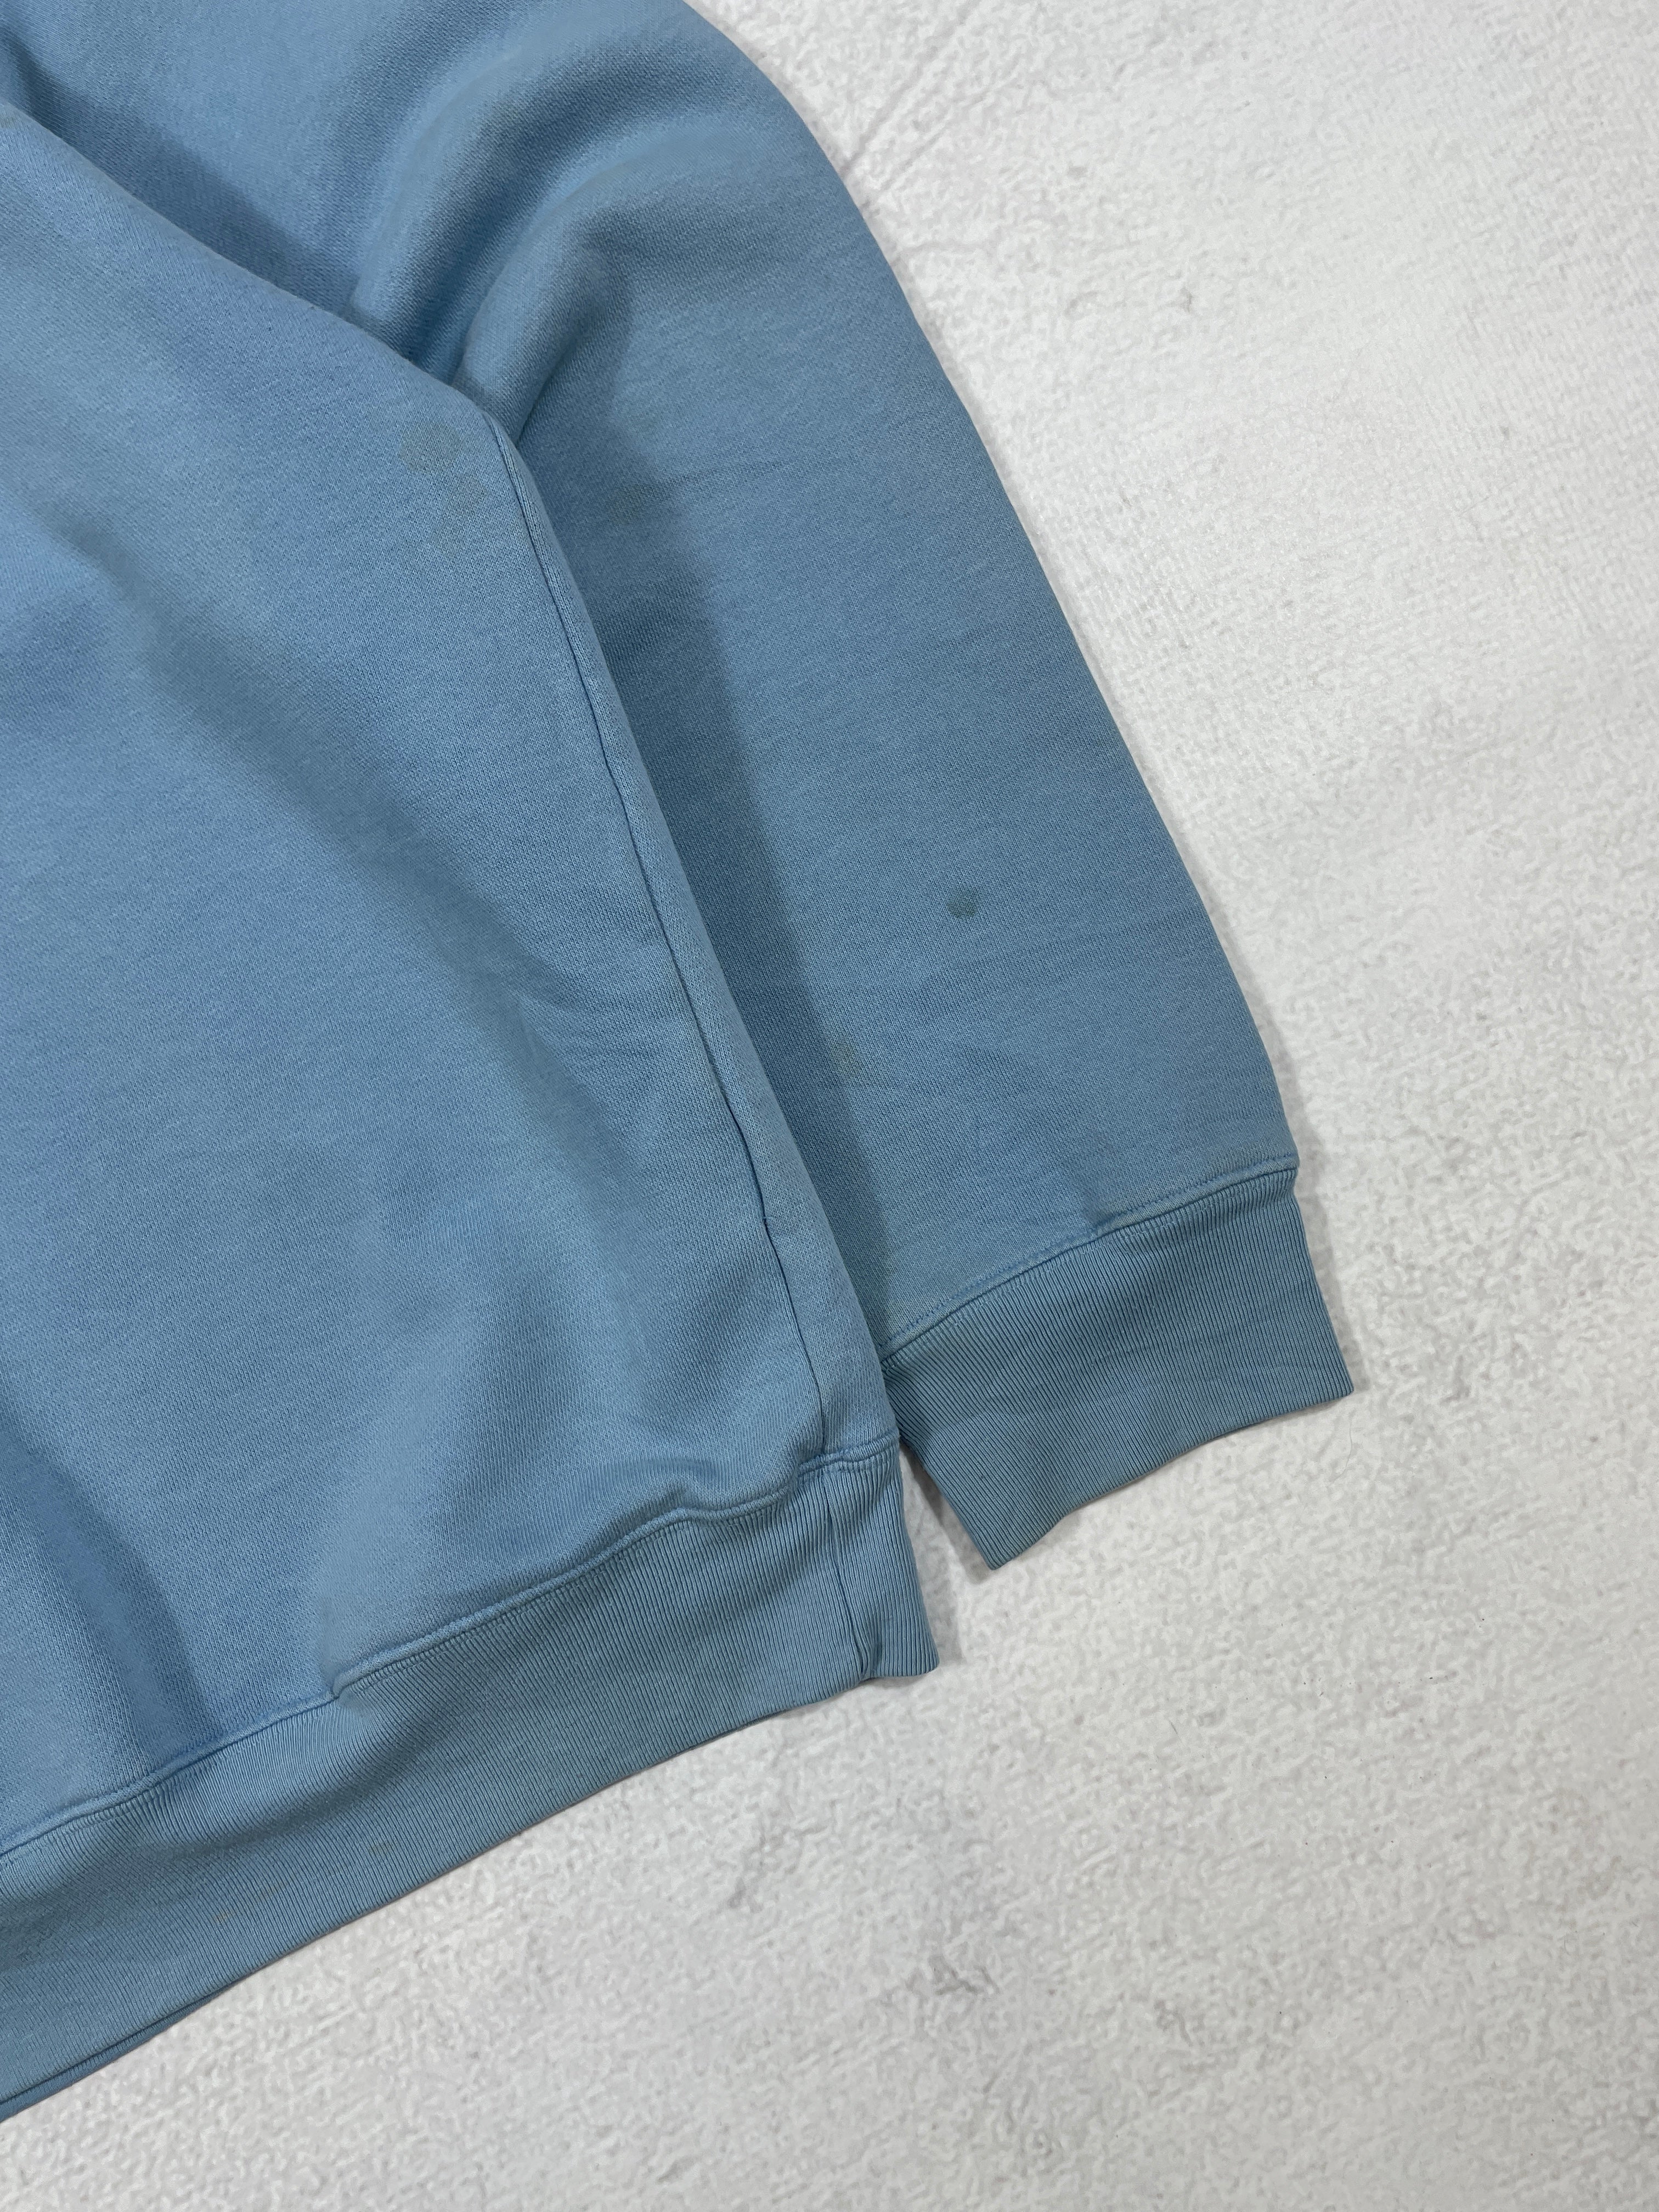 Vintage Nautica Crewneck Sweatshirt - Men's Medium